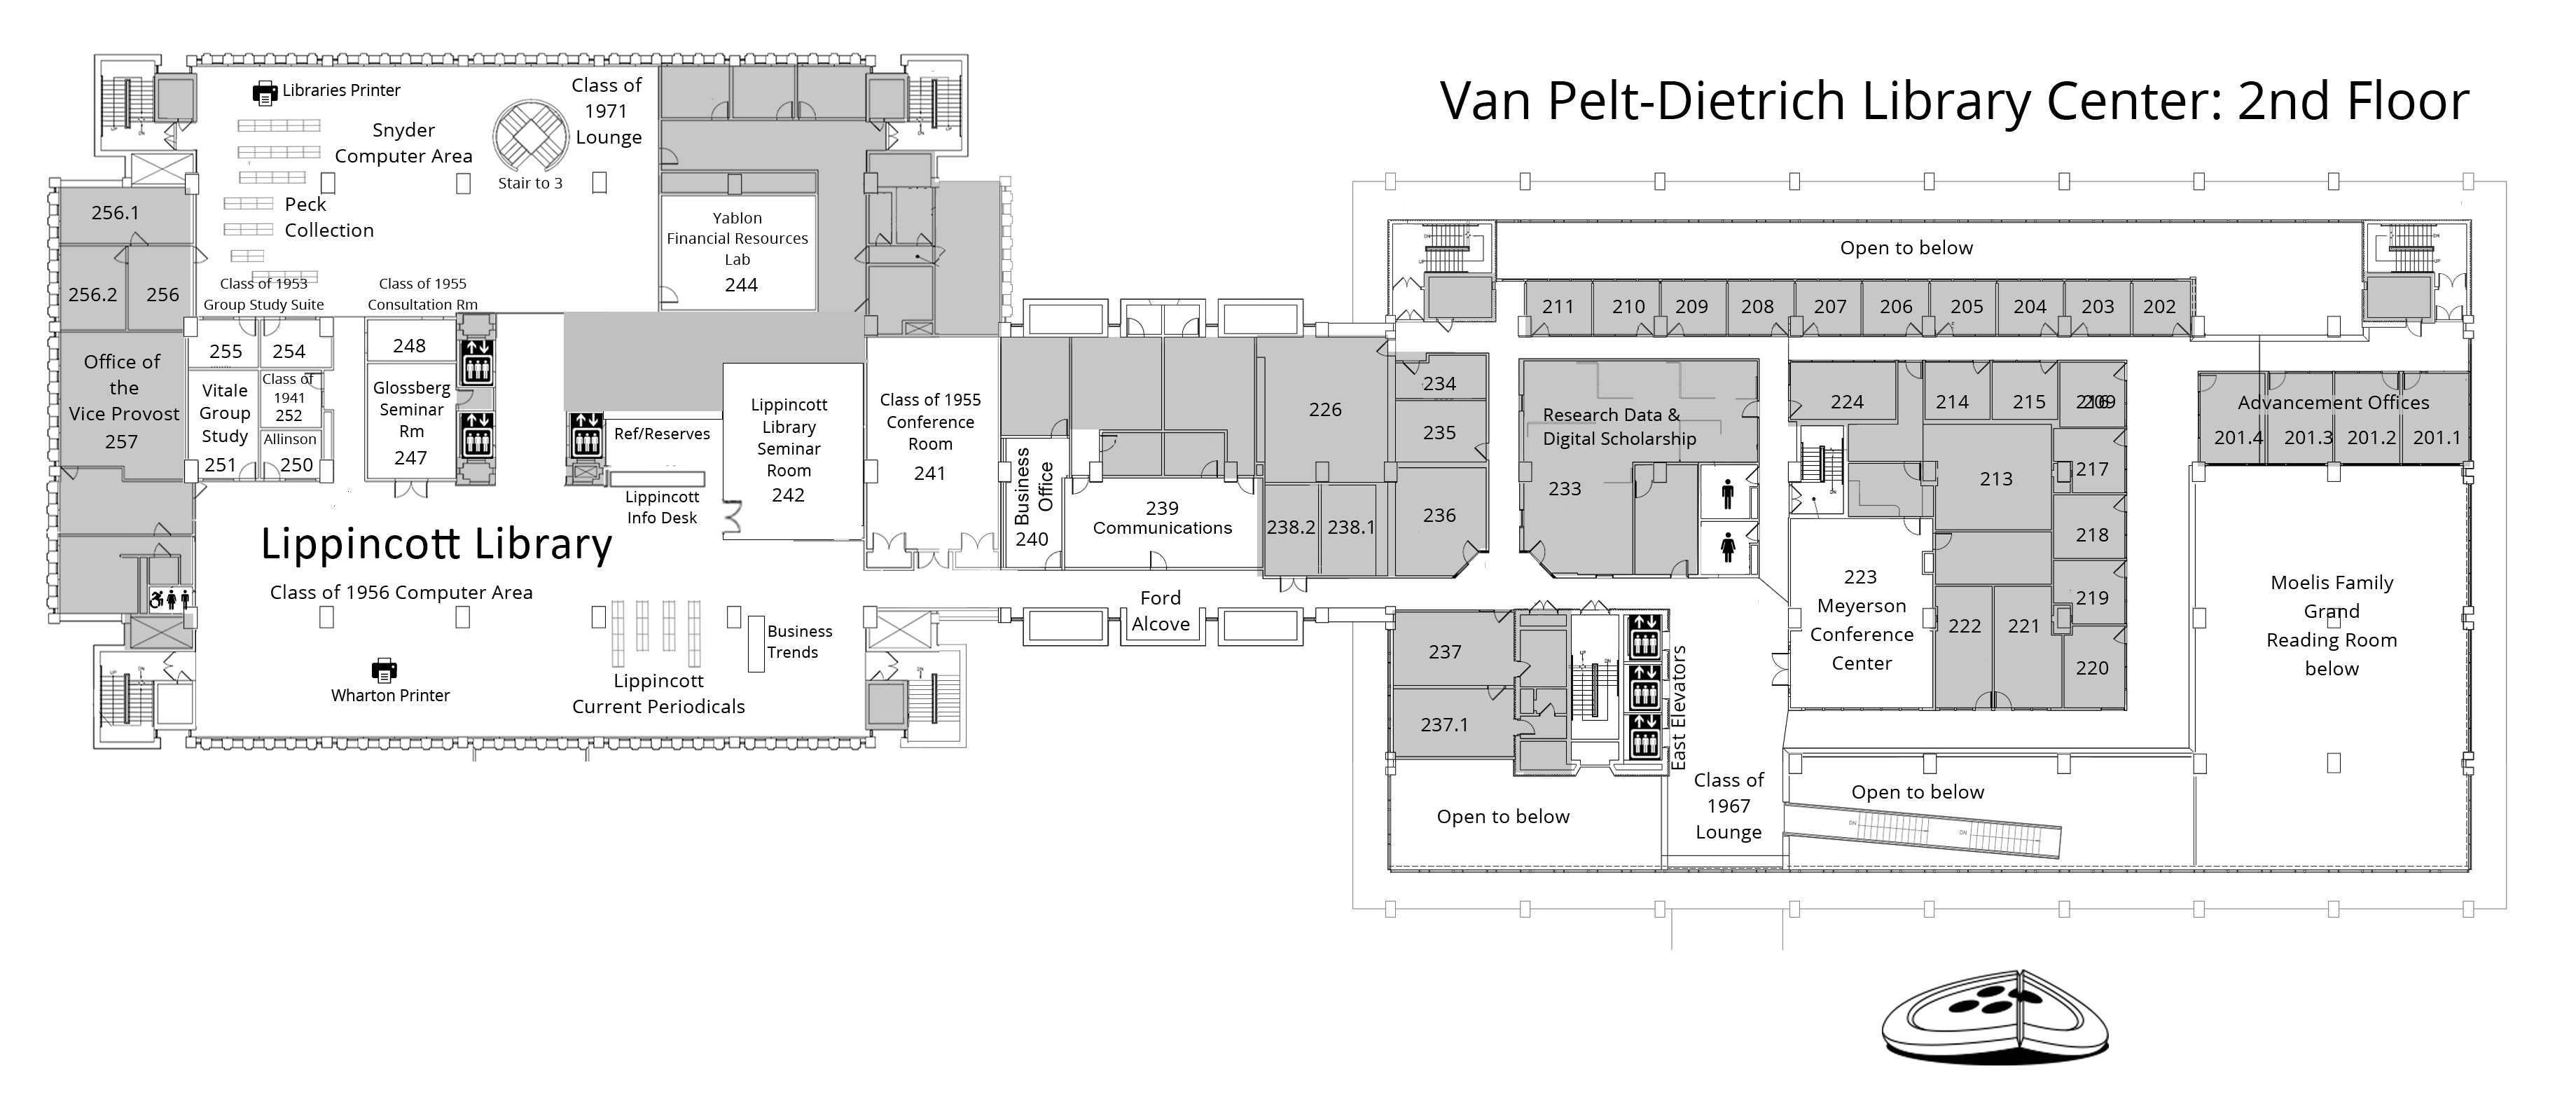 second floor plan, Van Pelt-Dietrich Library Center. Full description is linked below.